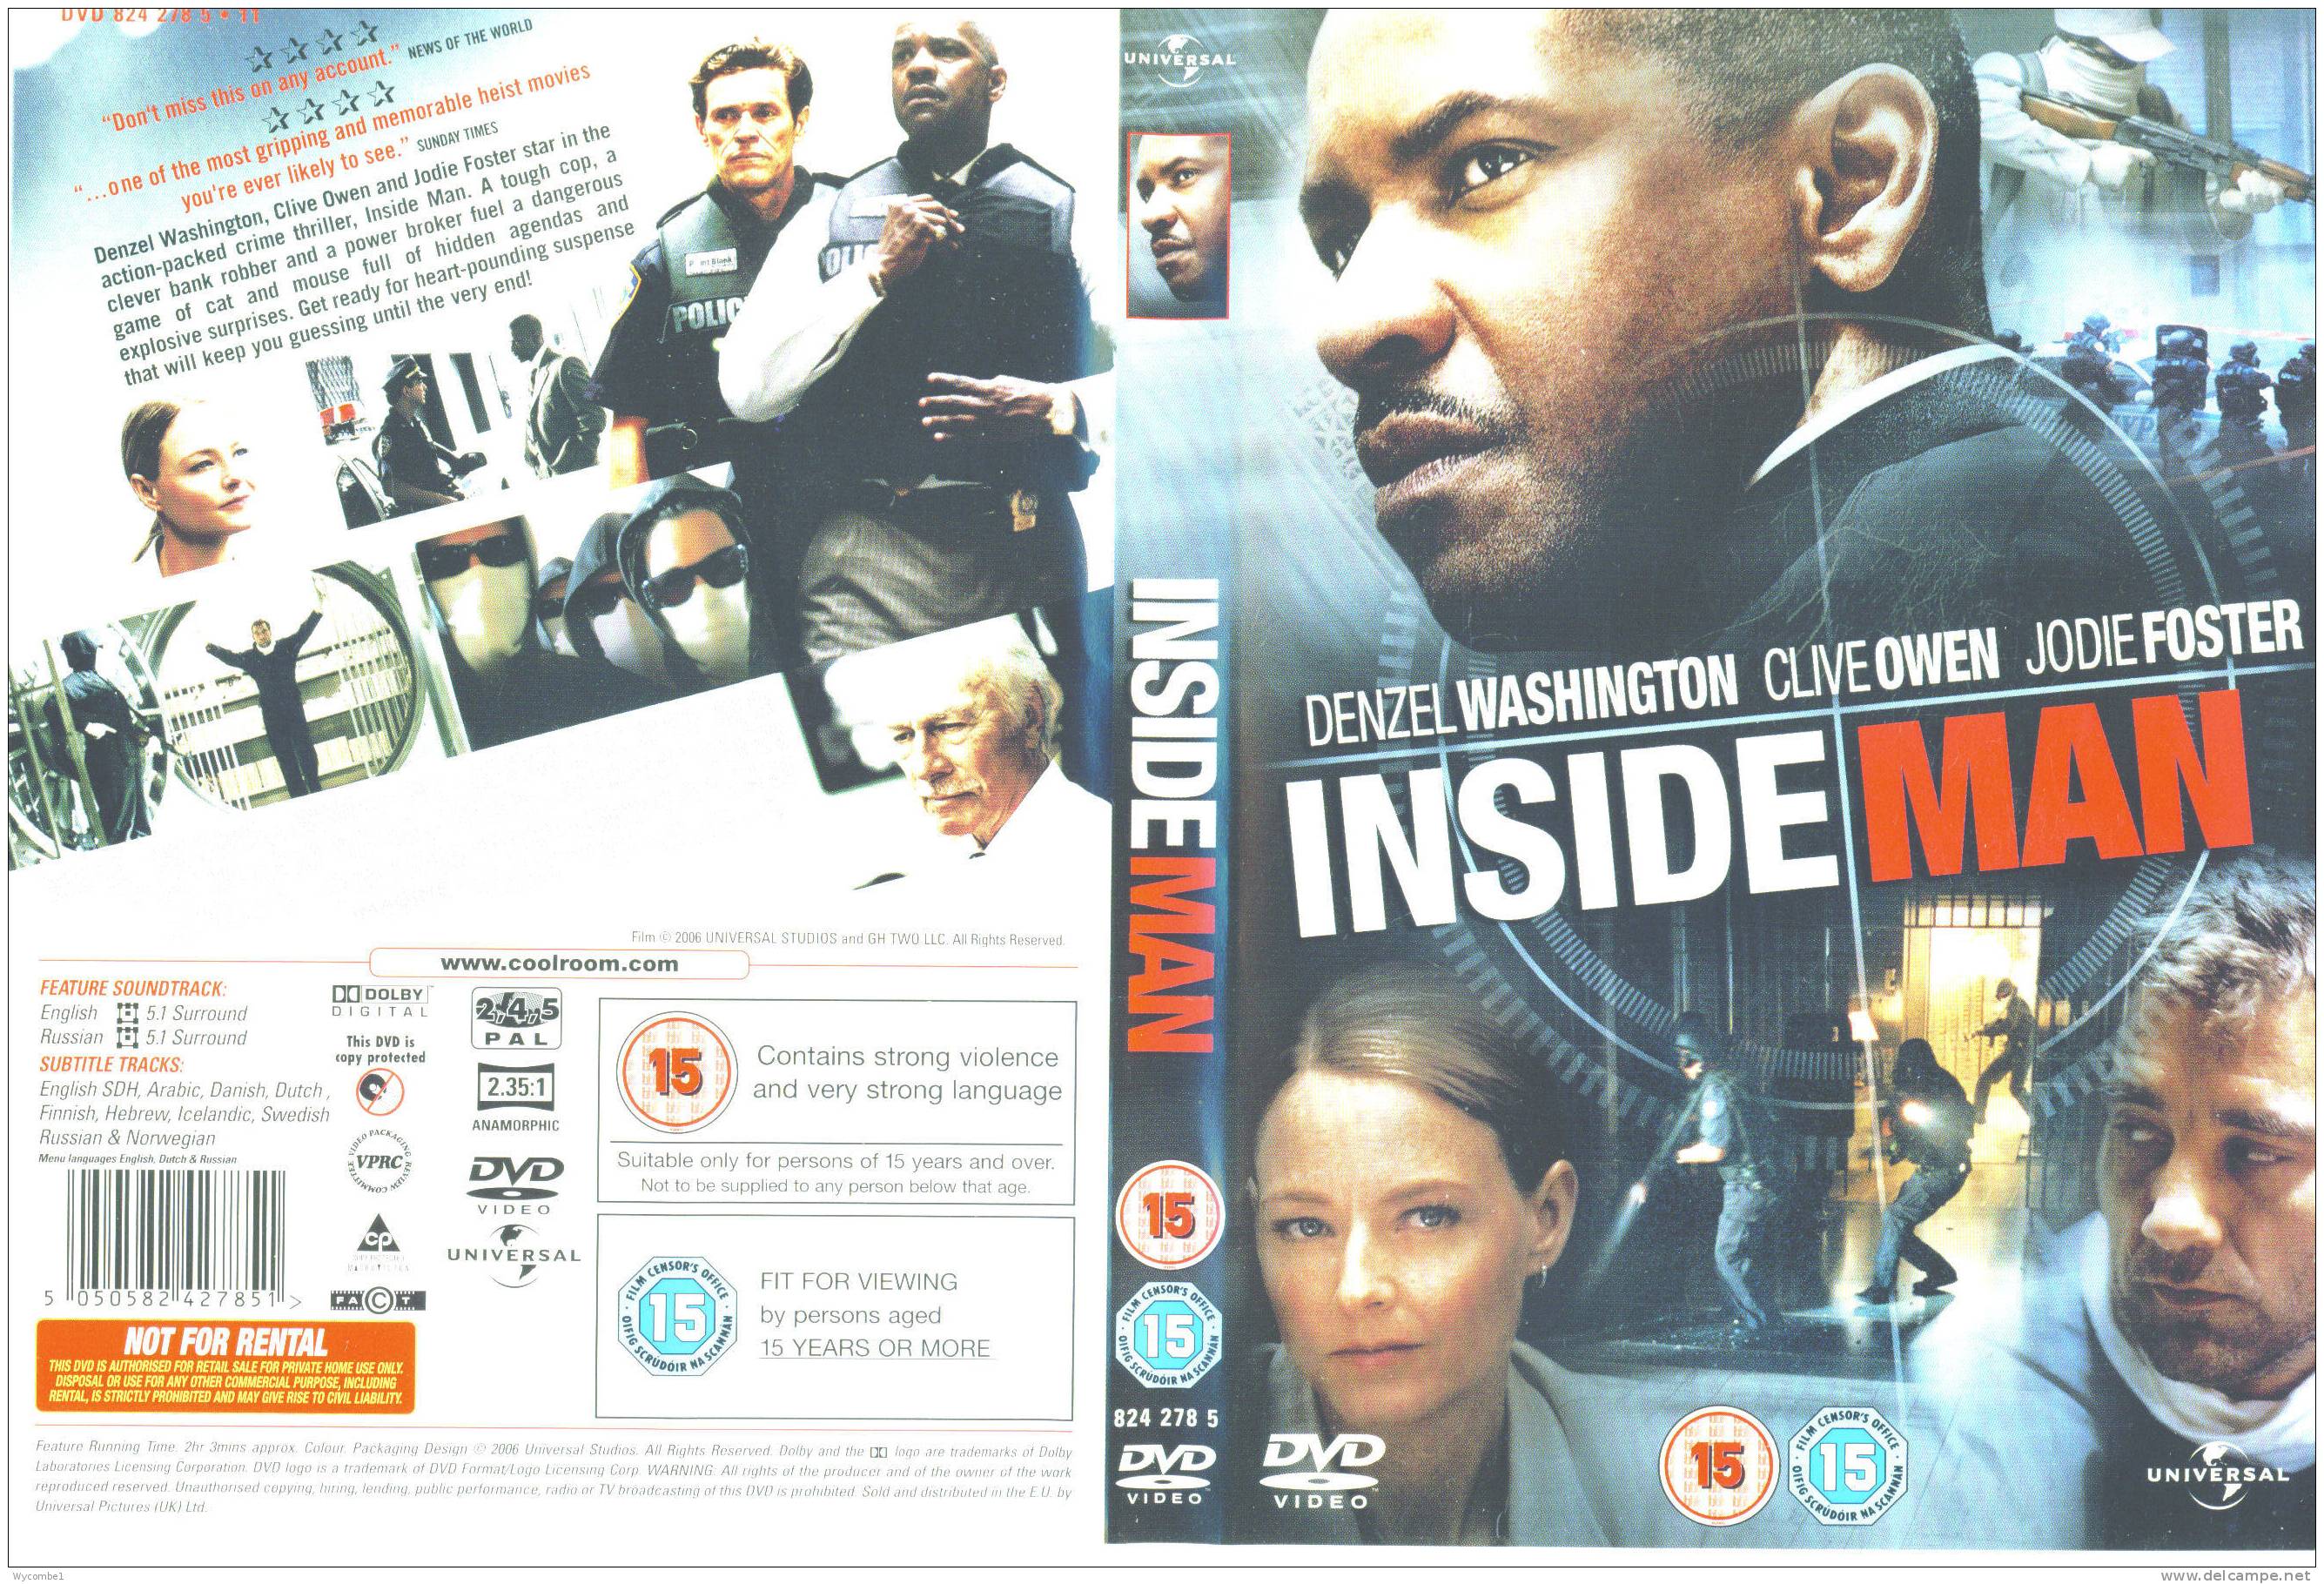 INSIDE MAN - Denzel Washington (Details As Scan) - Polizieschi